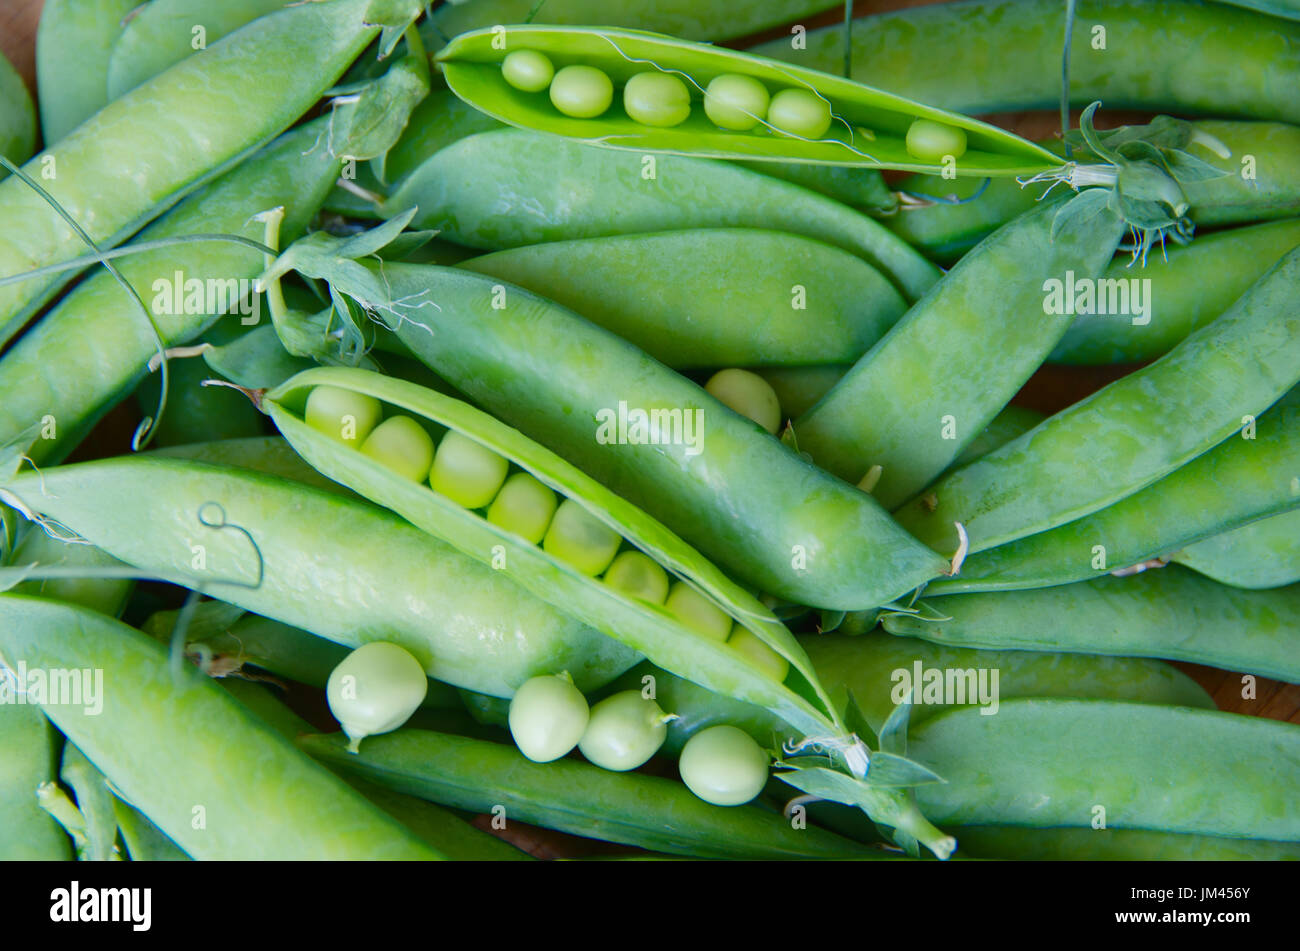 peas in a pod Stock Photo